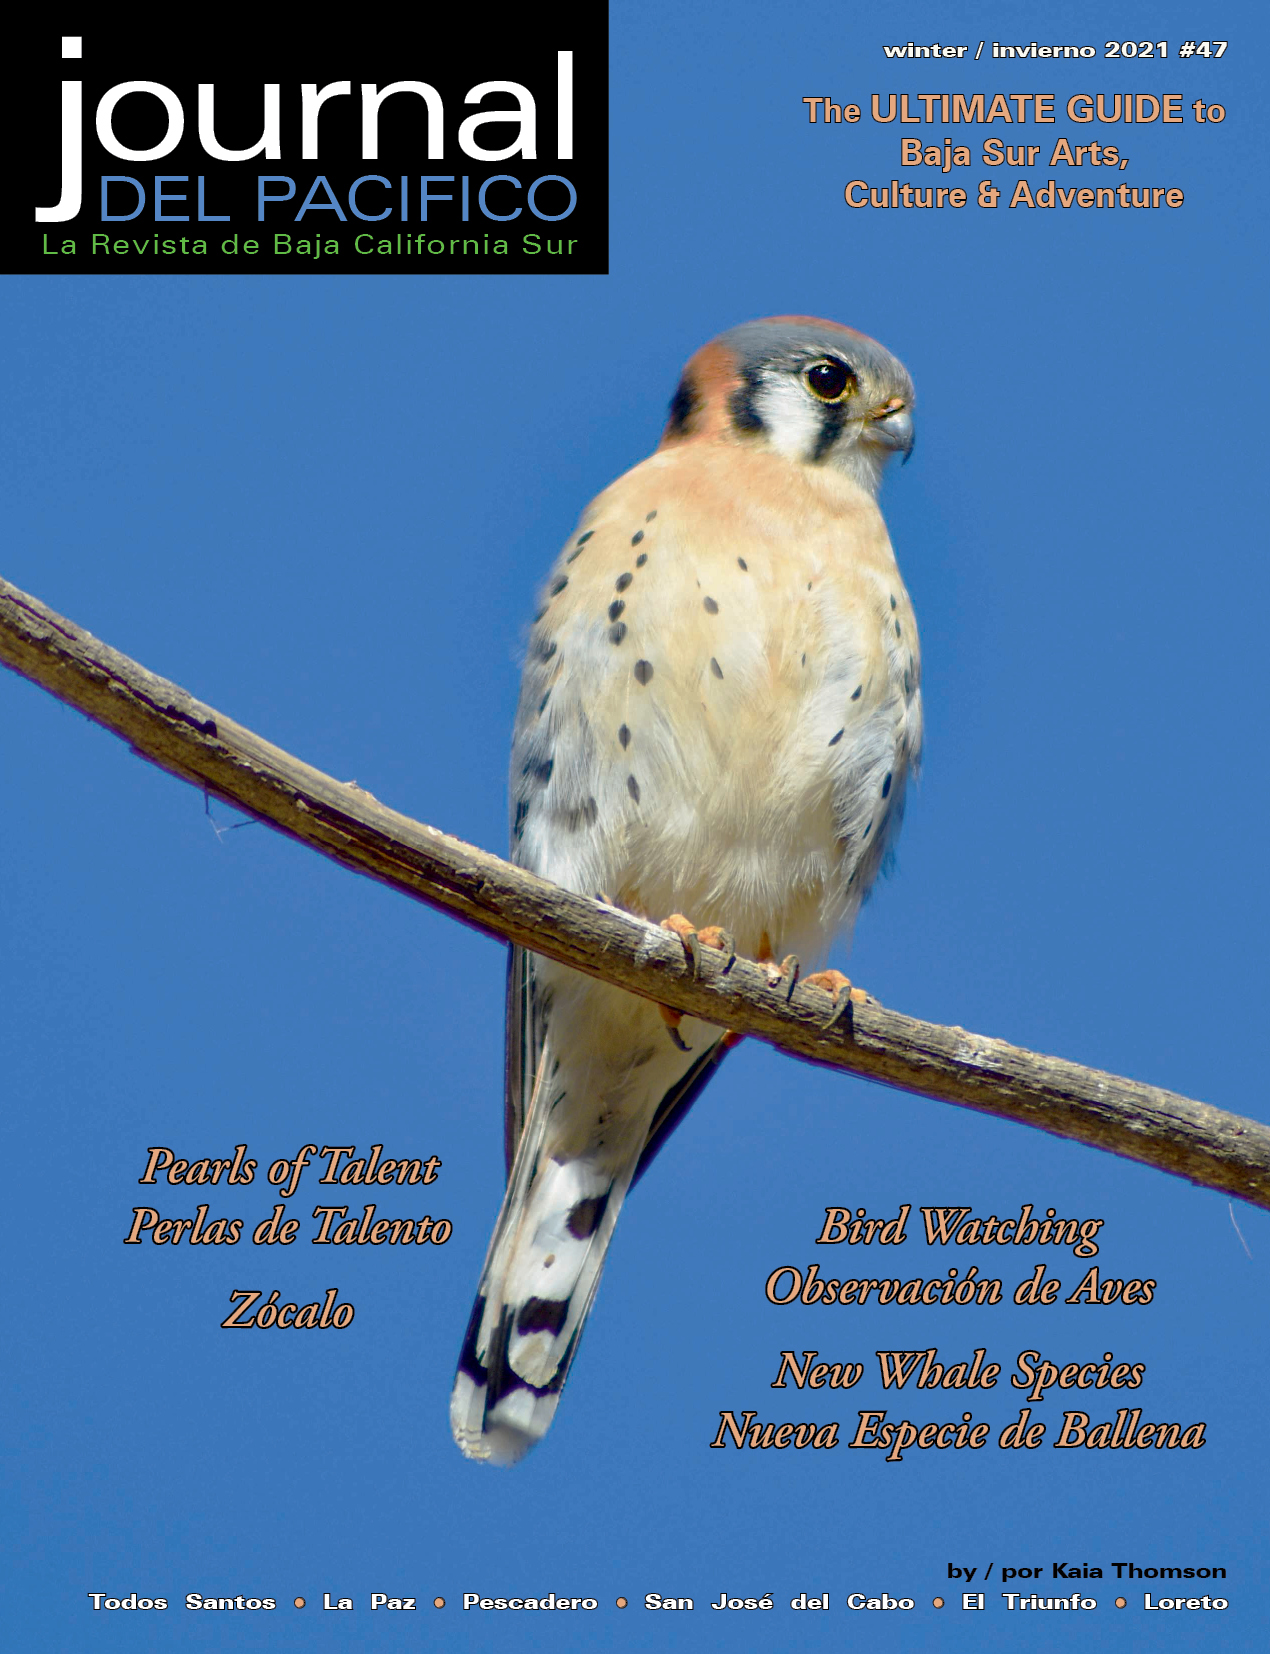 Winter/Invierno 2021 Issue of Journal del Pacifico